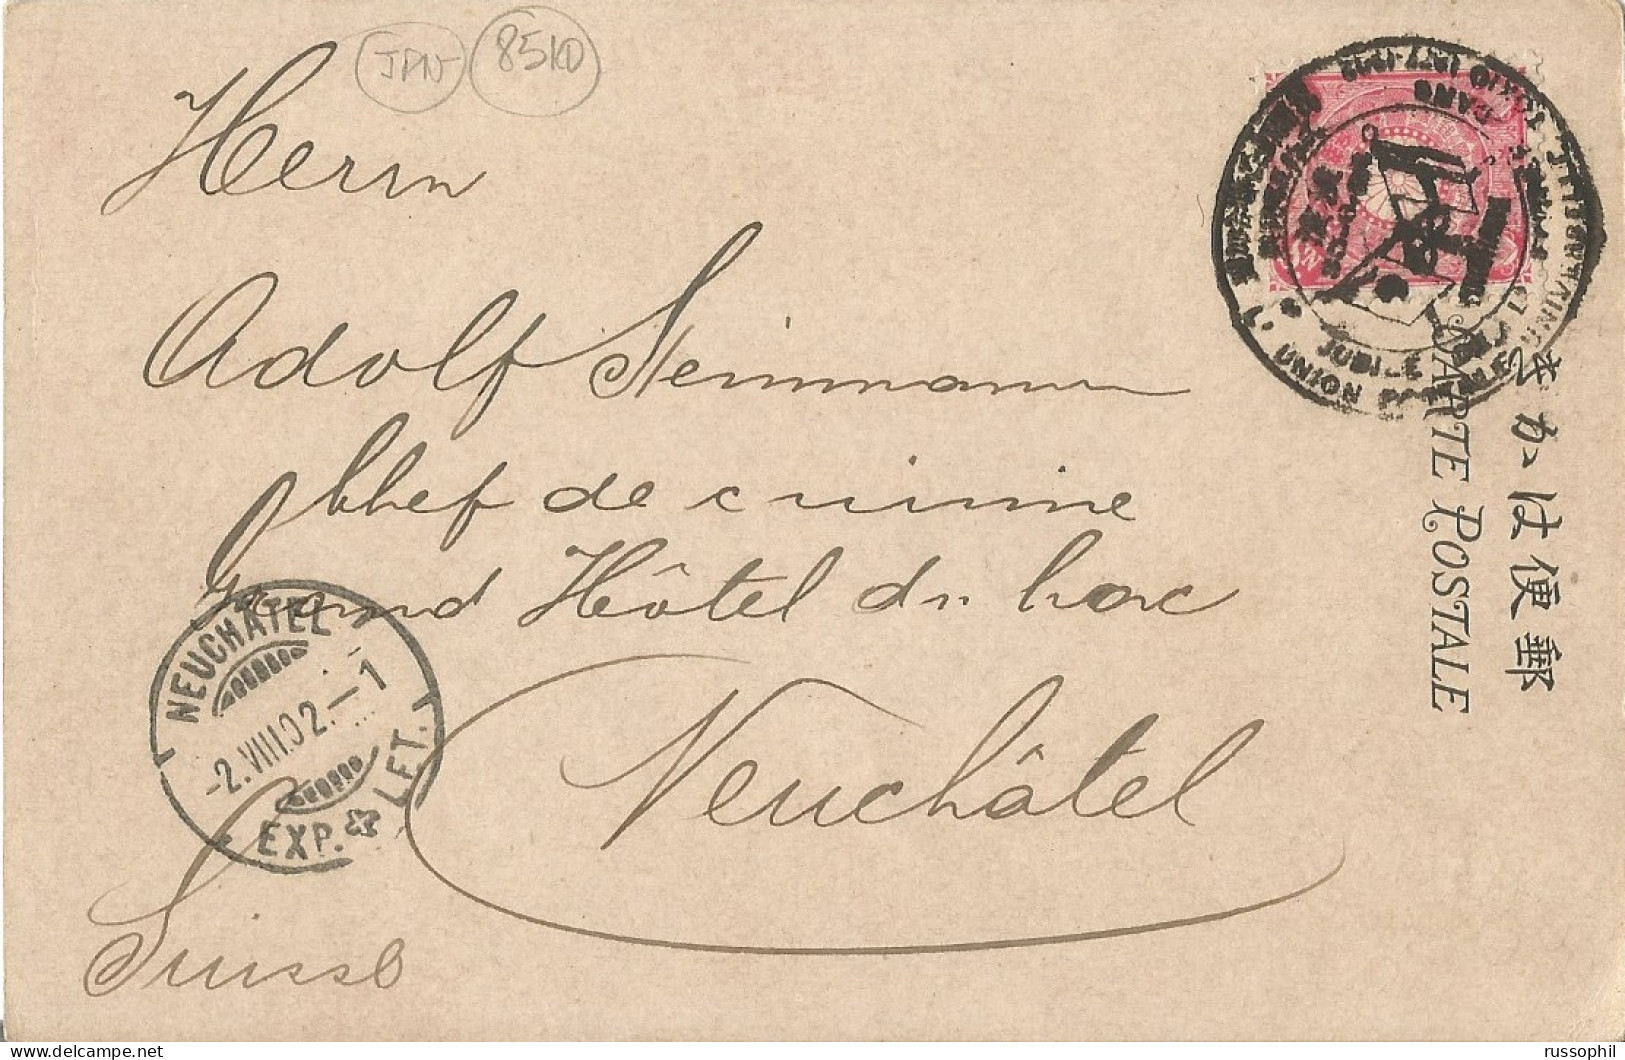 JAPON - UNION POSTALE UNIVERSELLE TOKIO 1877 1902 - (ANCIEN LOCAL DE LA DIETE) - FROM YOKOHAMA TO SWITZERLAND -1902  - Briefe U. Dokumente